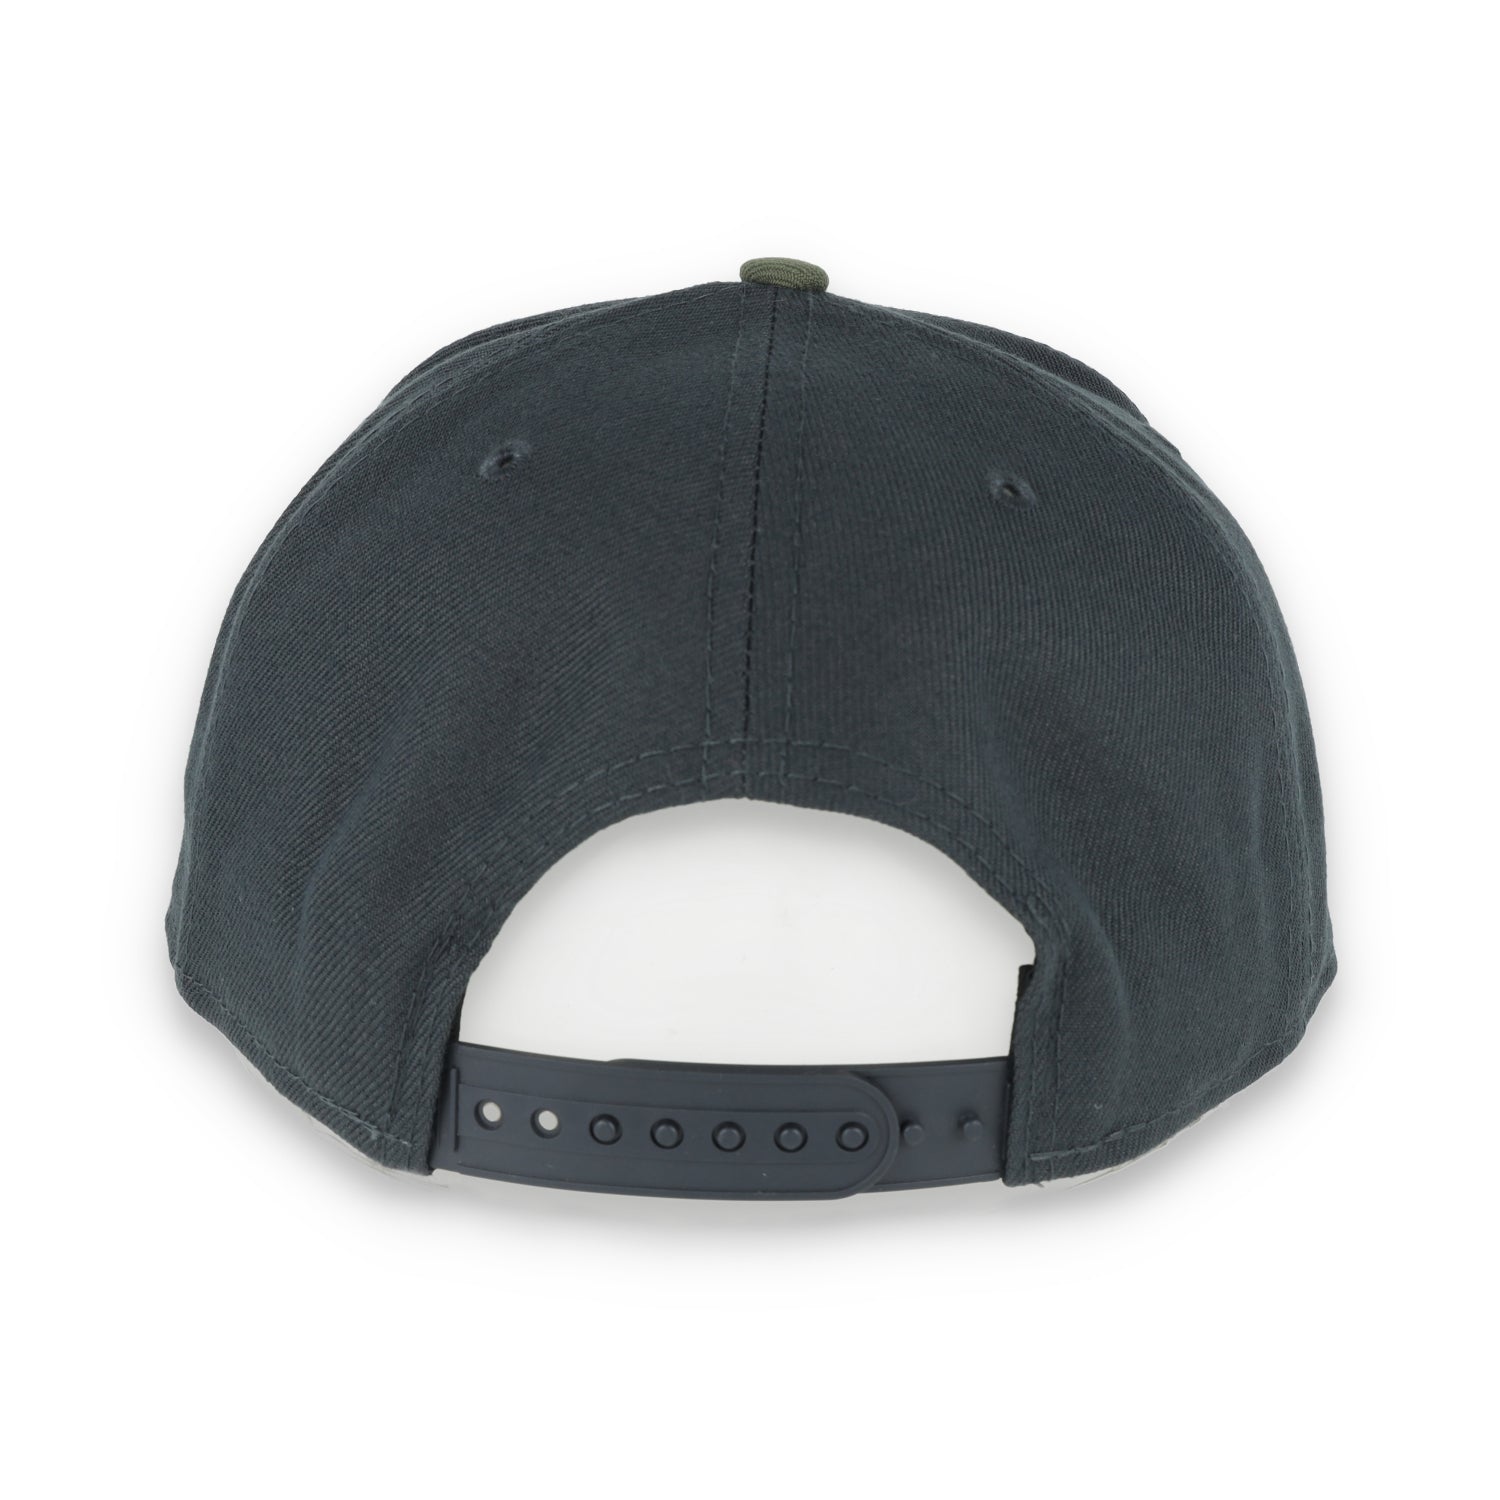 New Era Oakland Athletics 2-Tone Color Pack 9FIFTY Snapback Hat - Grey/Olive